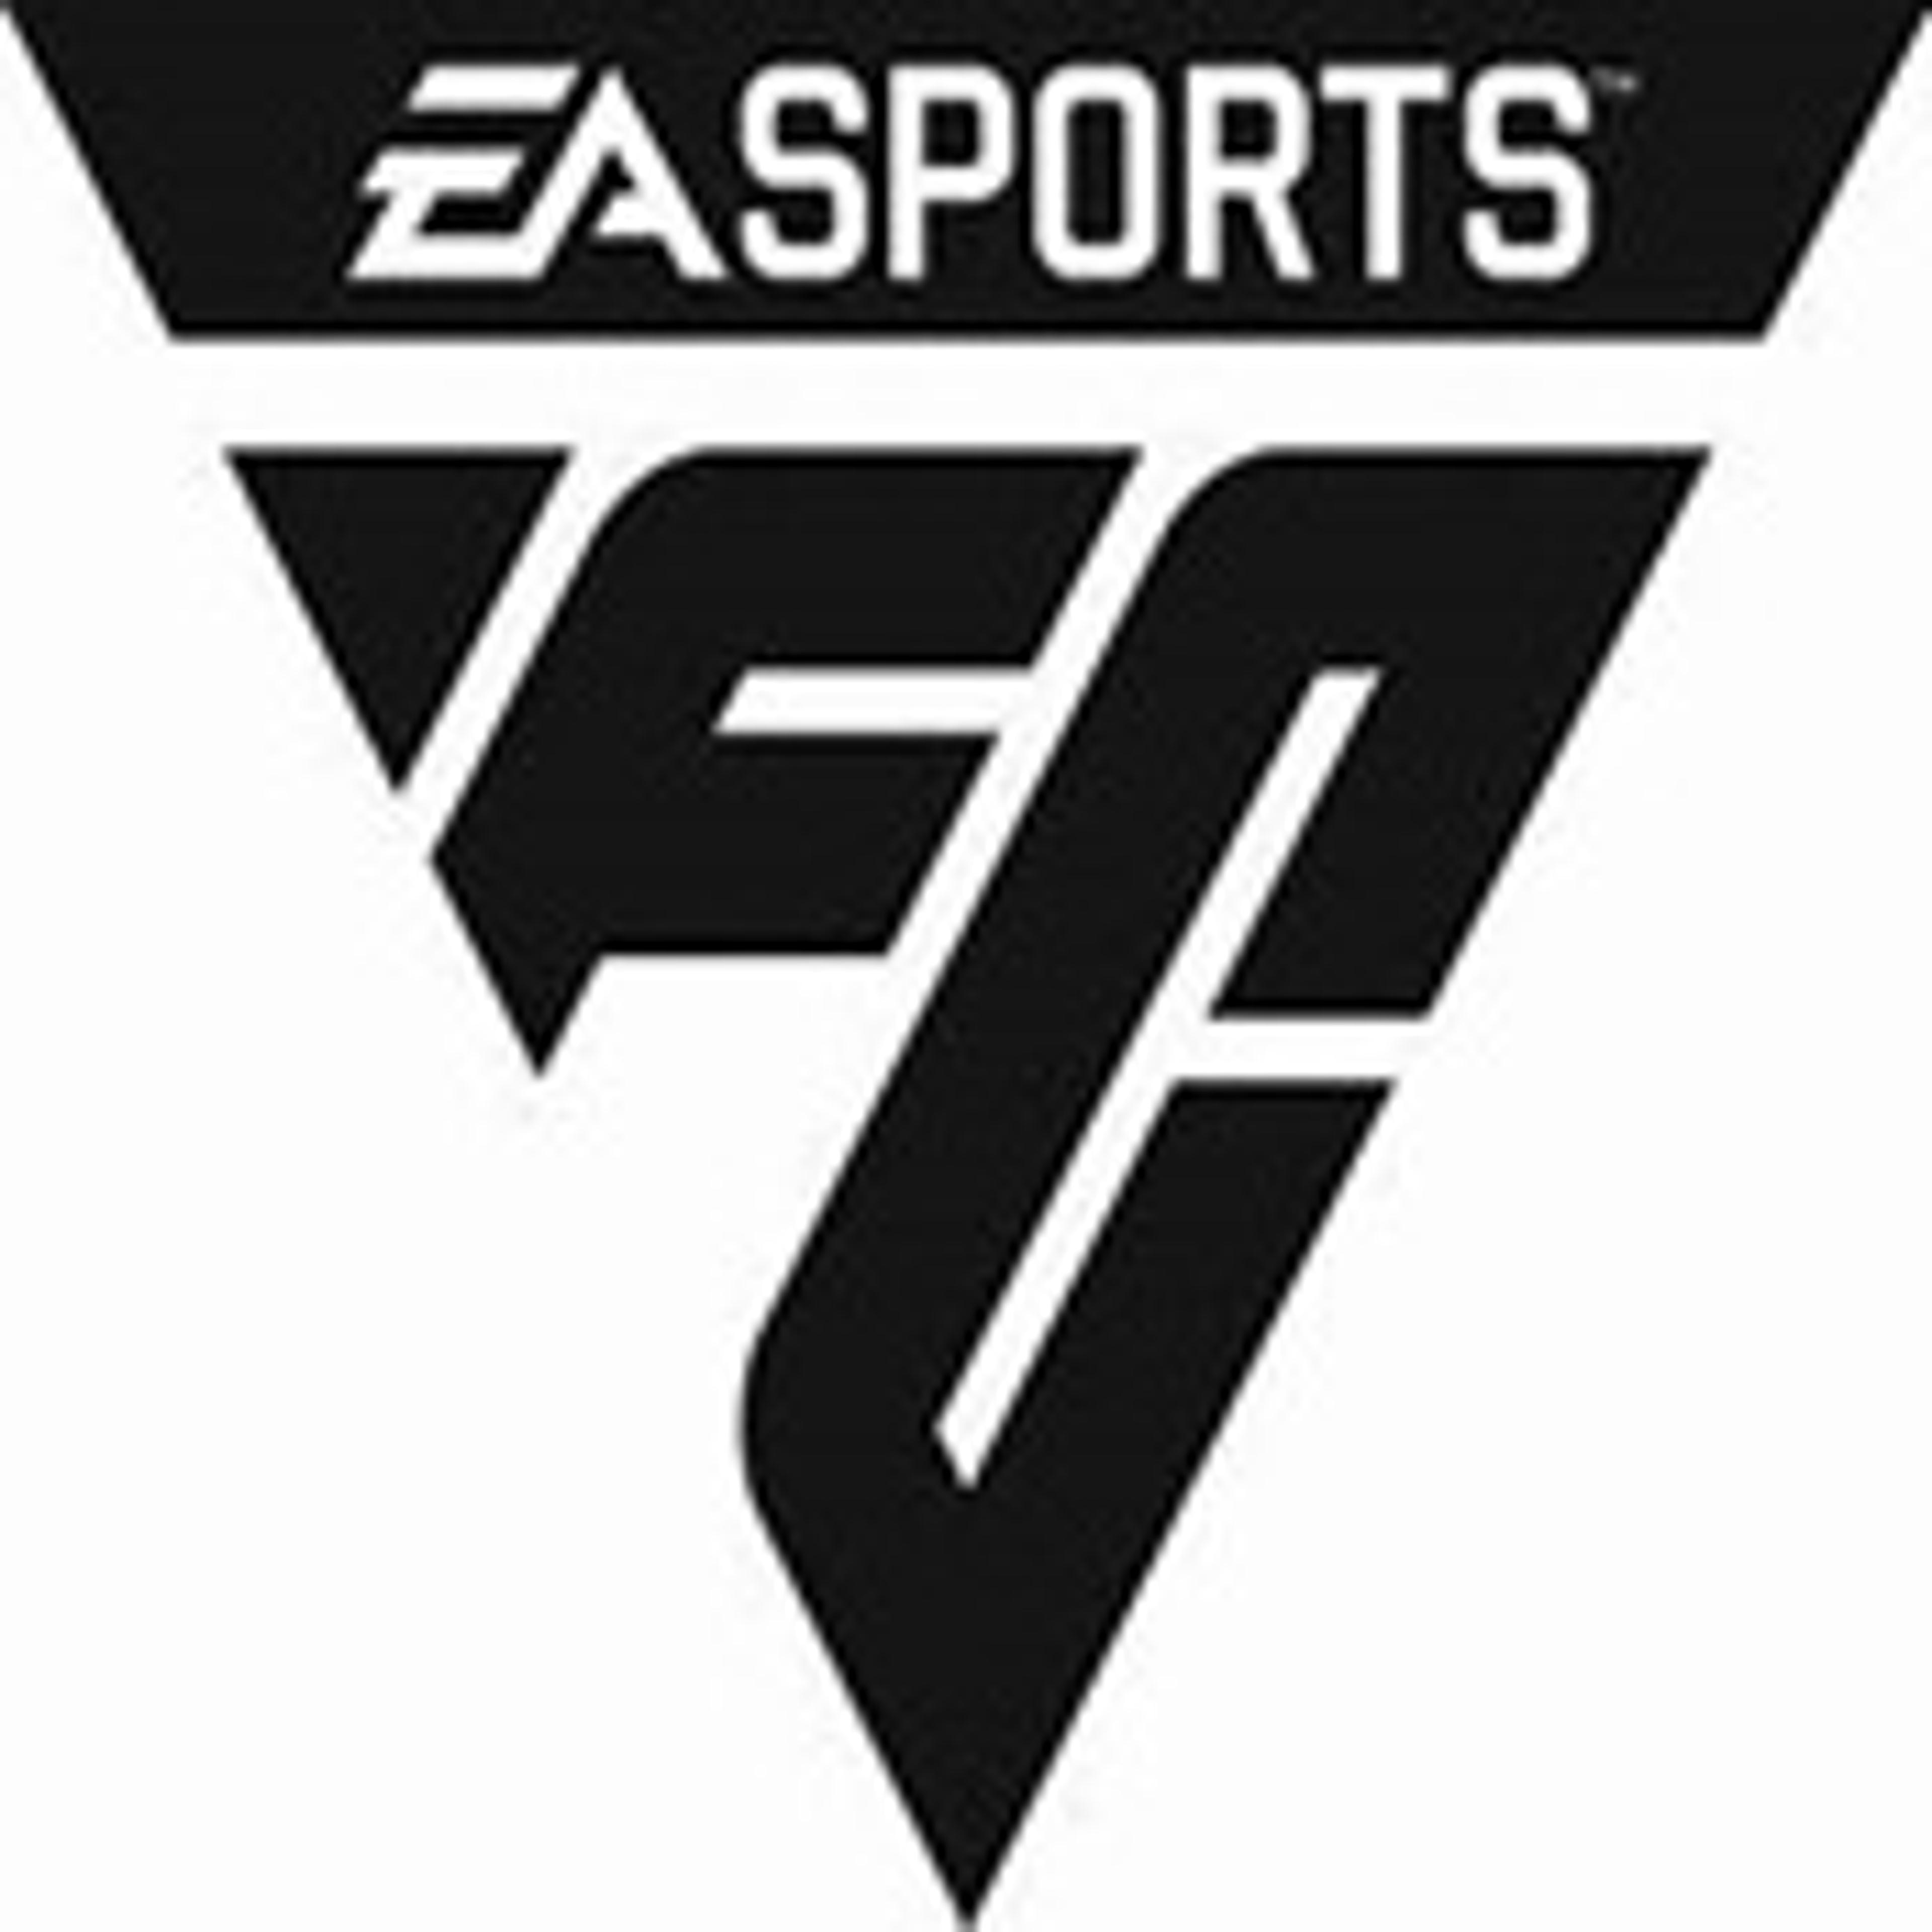 EASports FC 24 via Steam Wallet Code